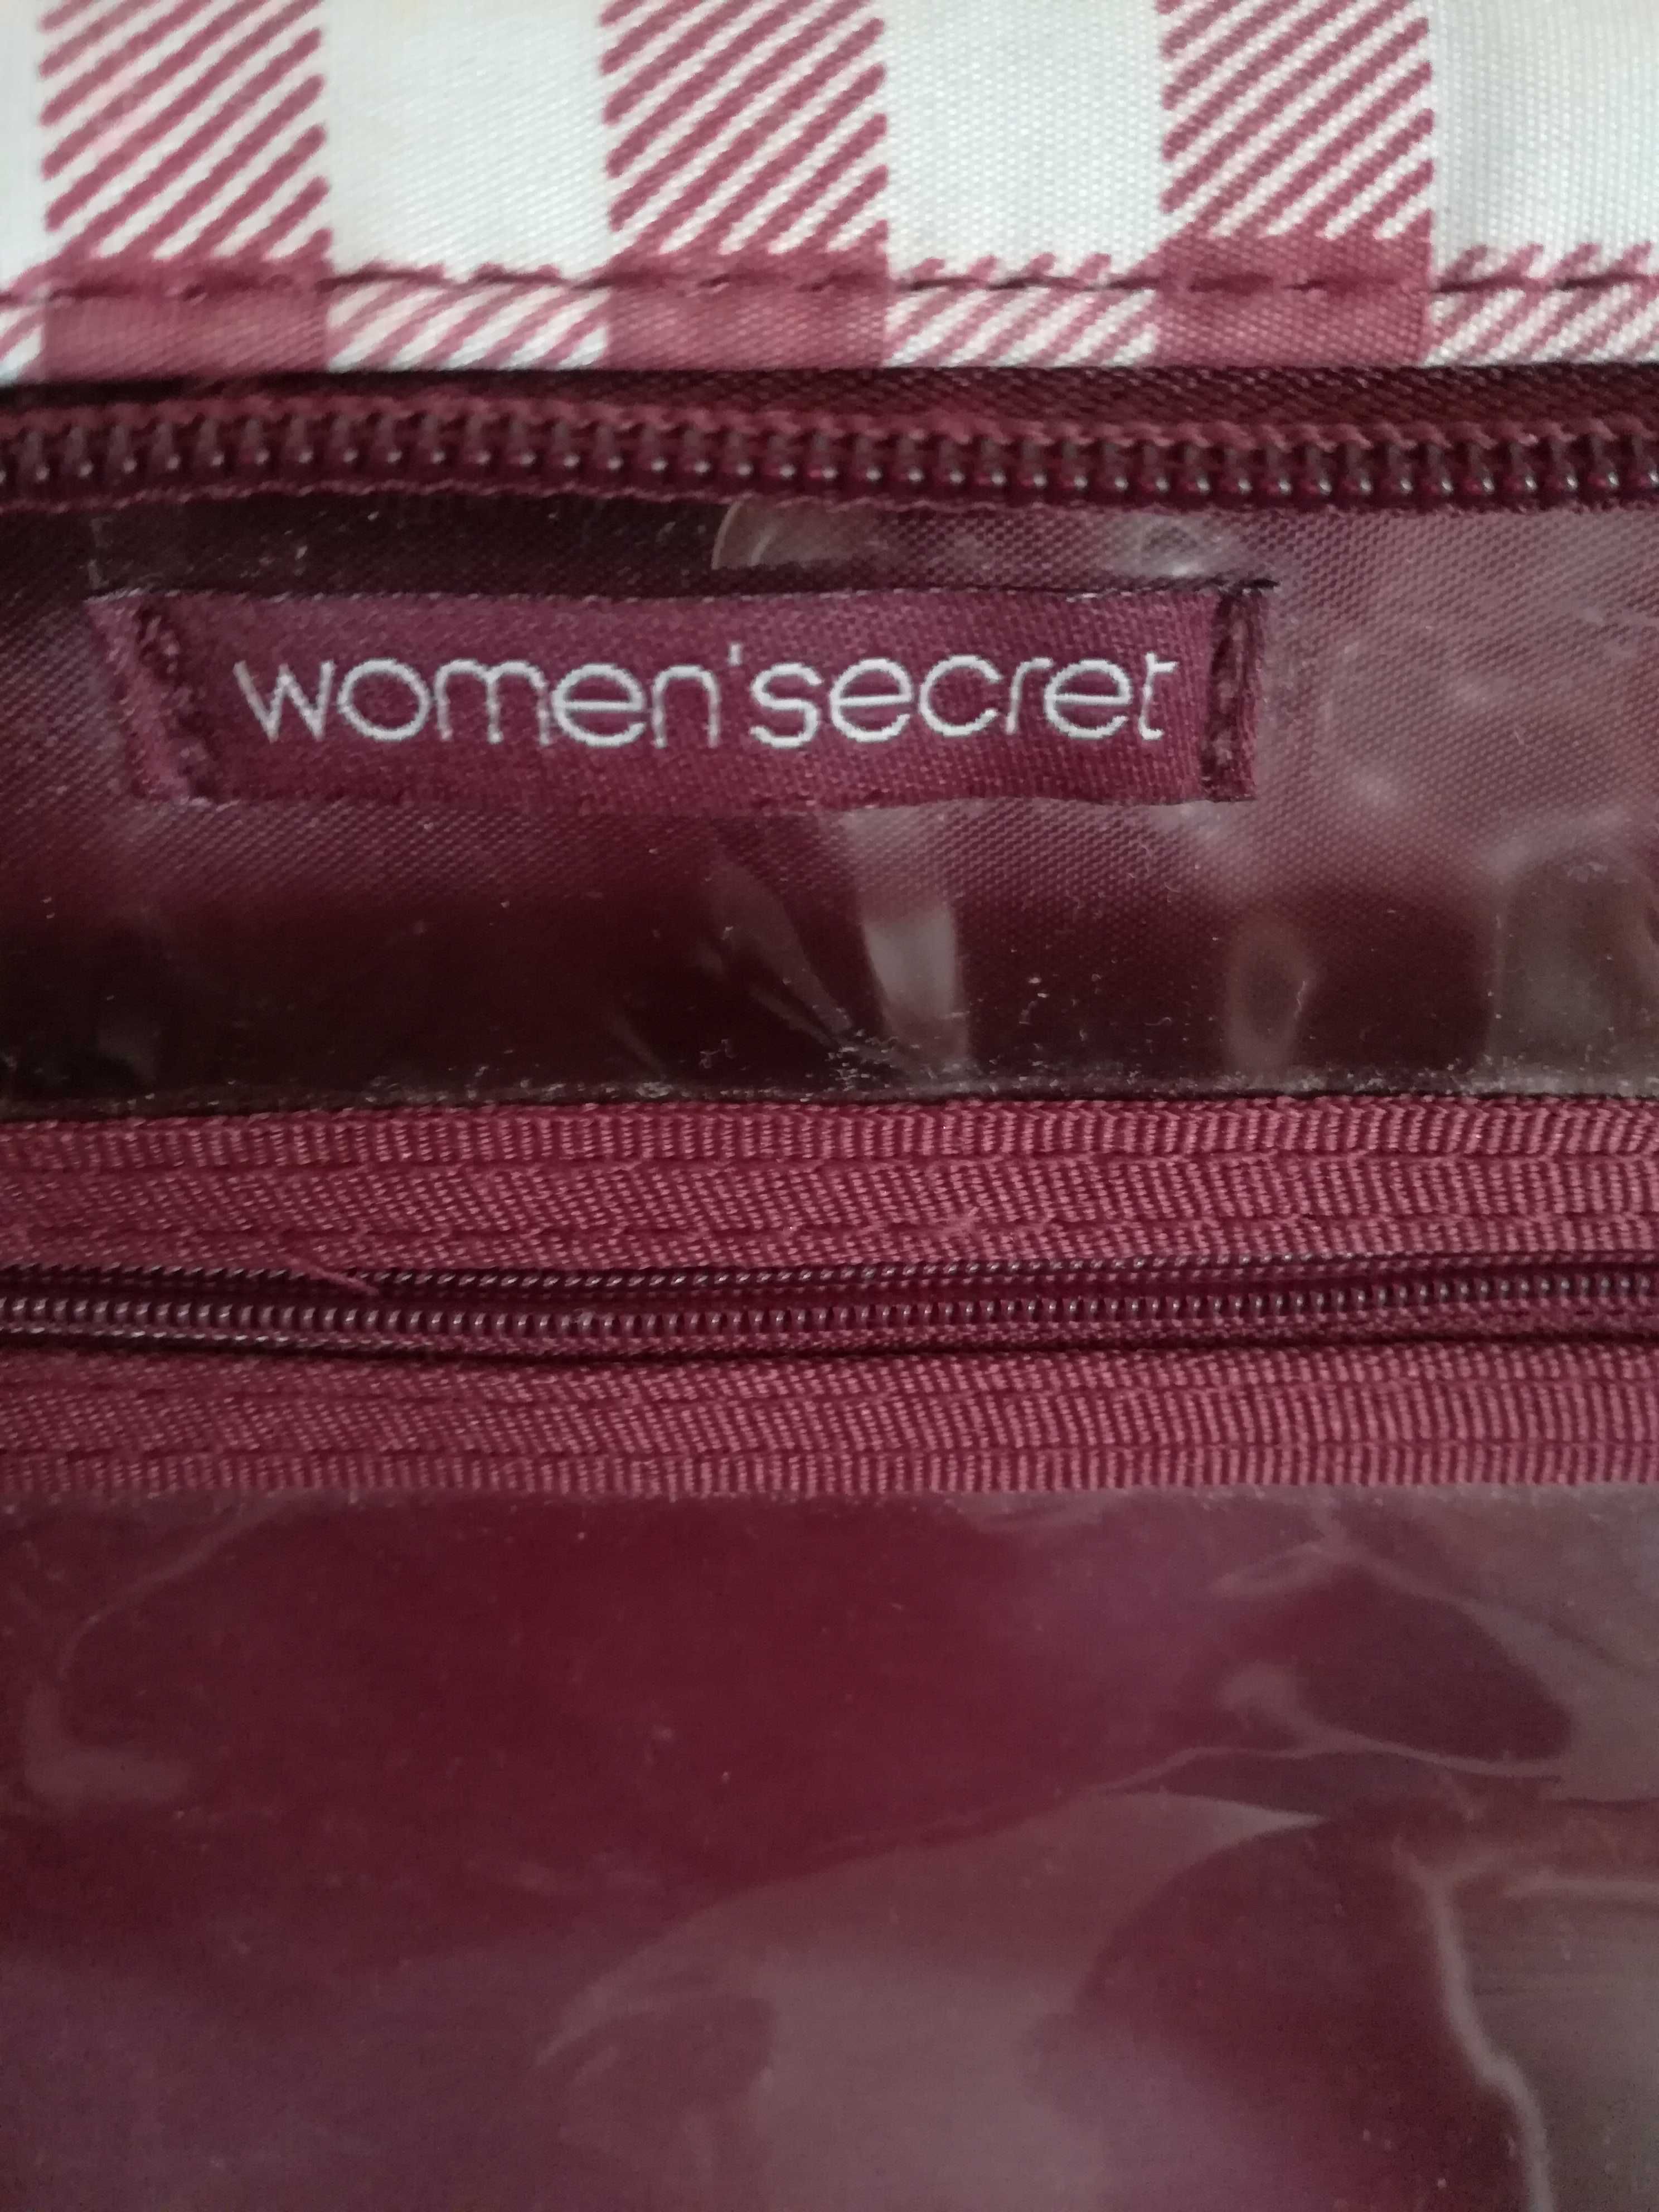 Women's secret bolsa viagem necessaire